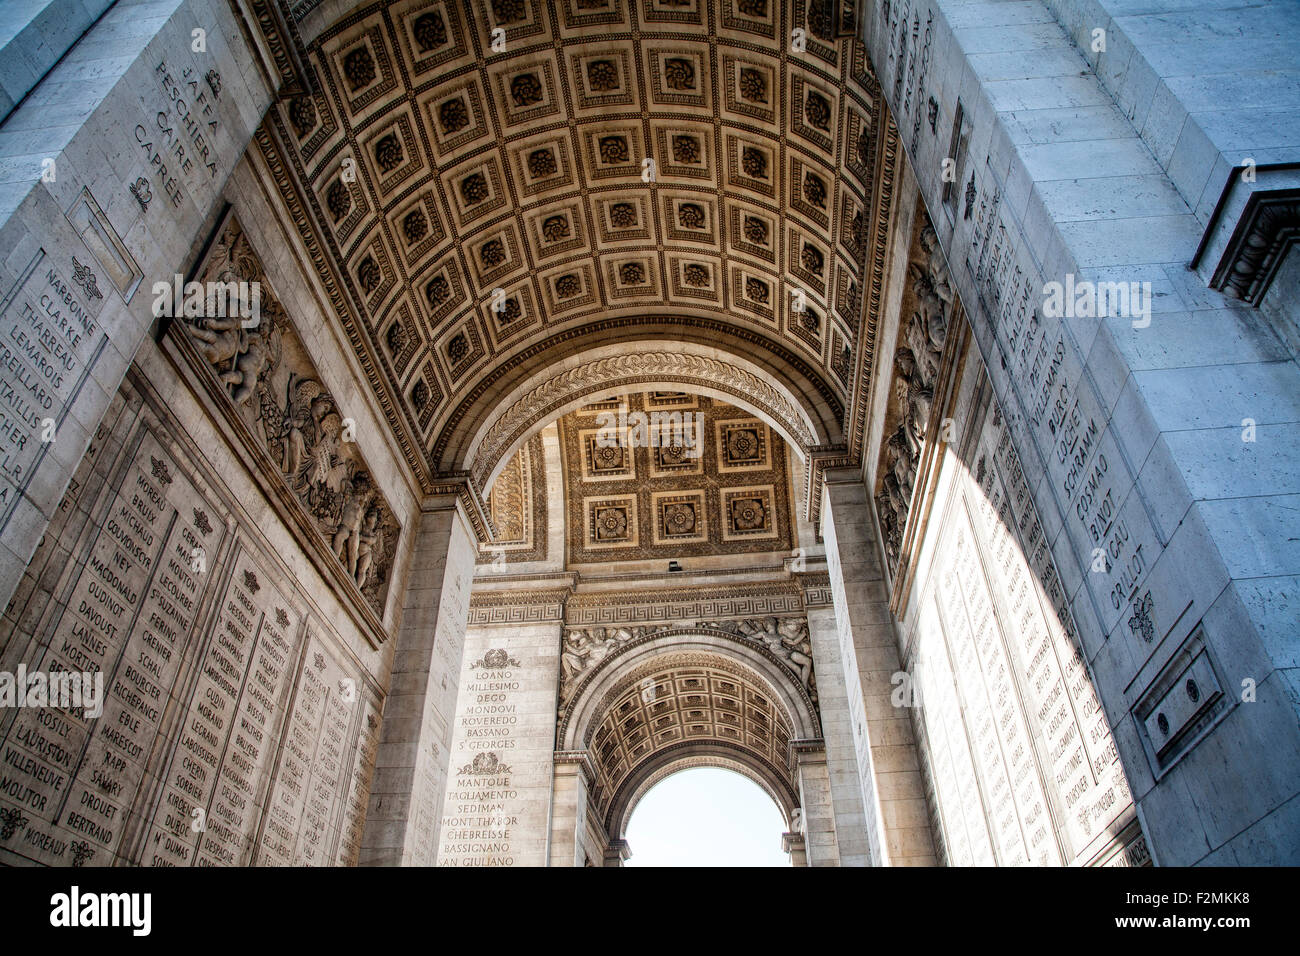 The interior ceilings of the Arc de Triomphe. Paris, France Stock Photo